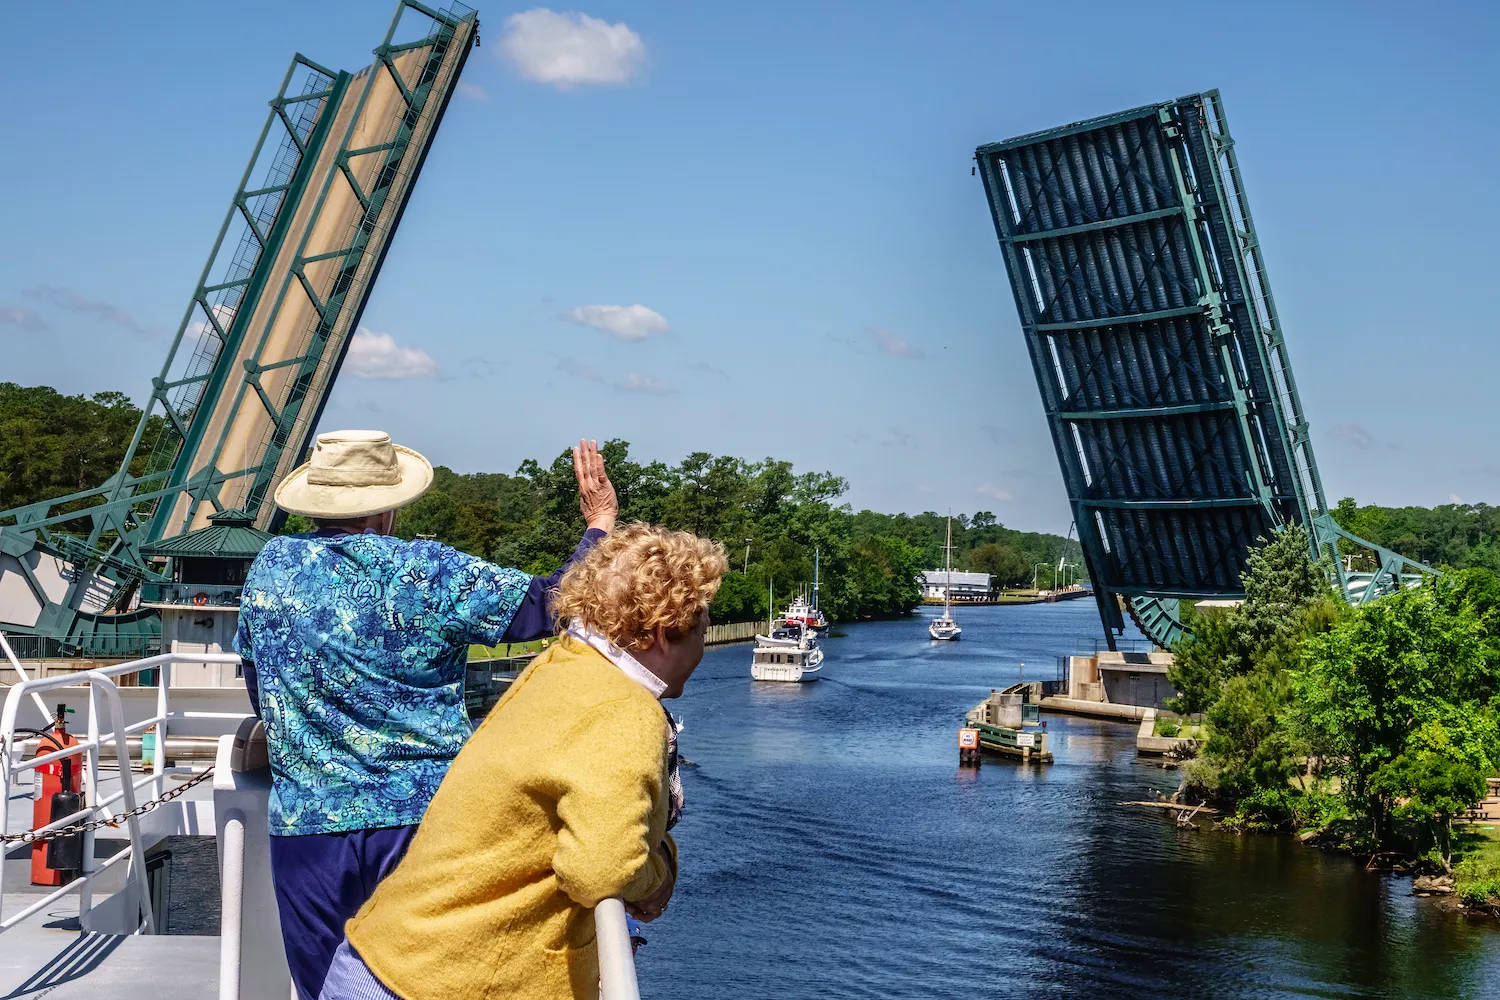 The Great Bridge In Chesapeake